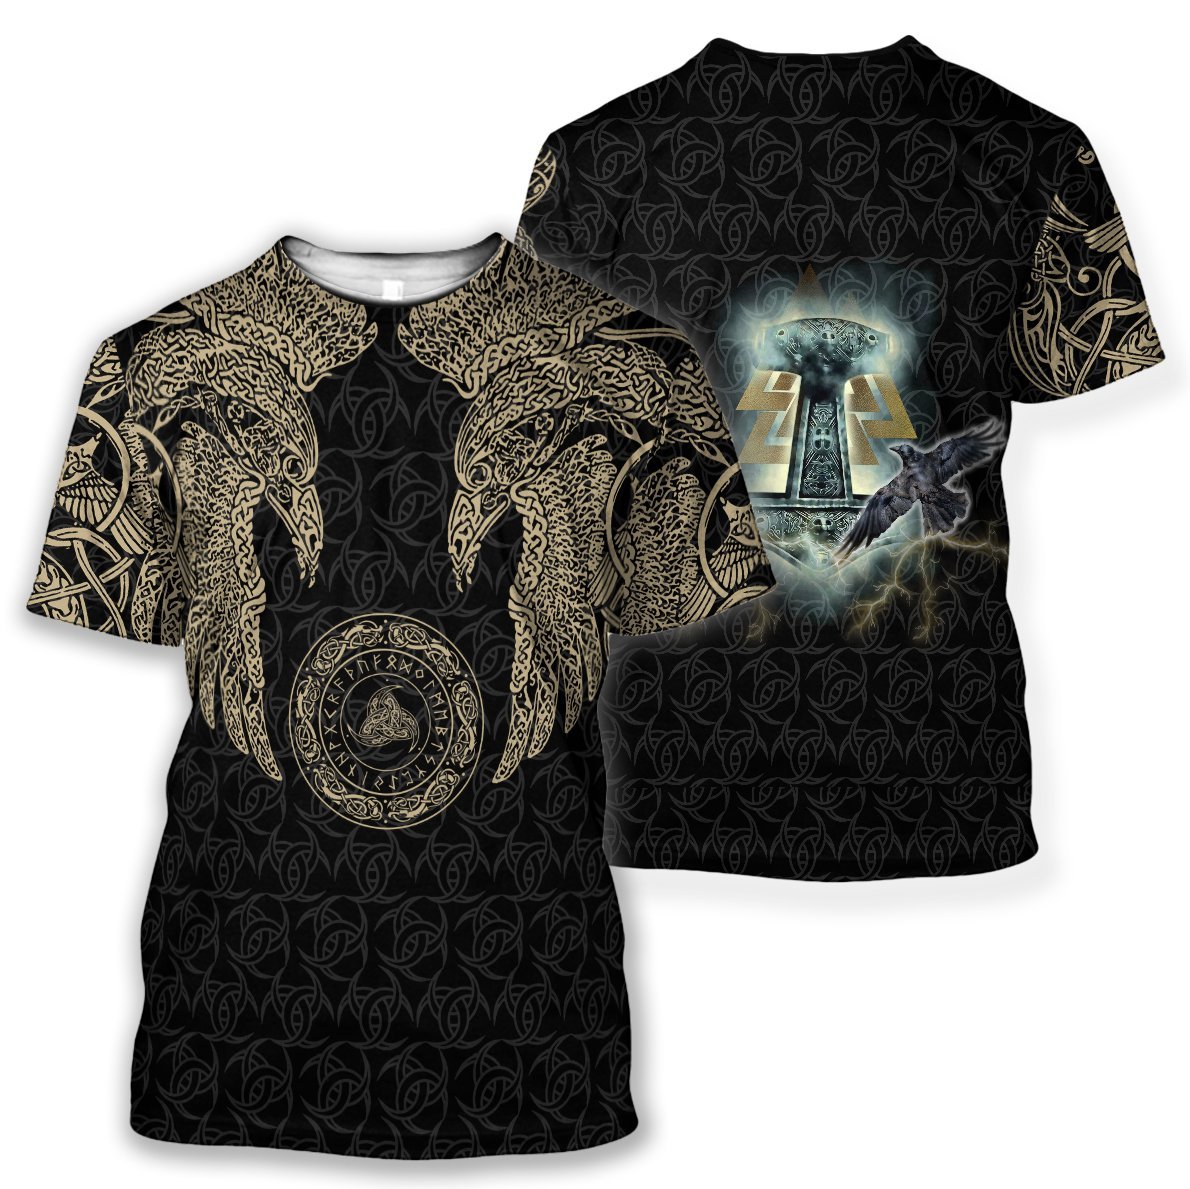 Odin's ravens viking all over printed tshirt